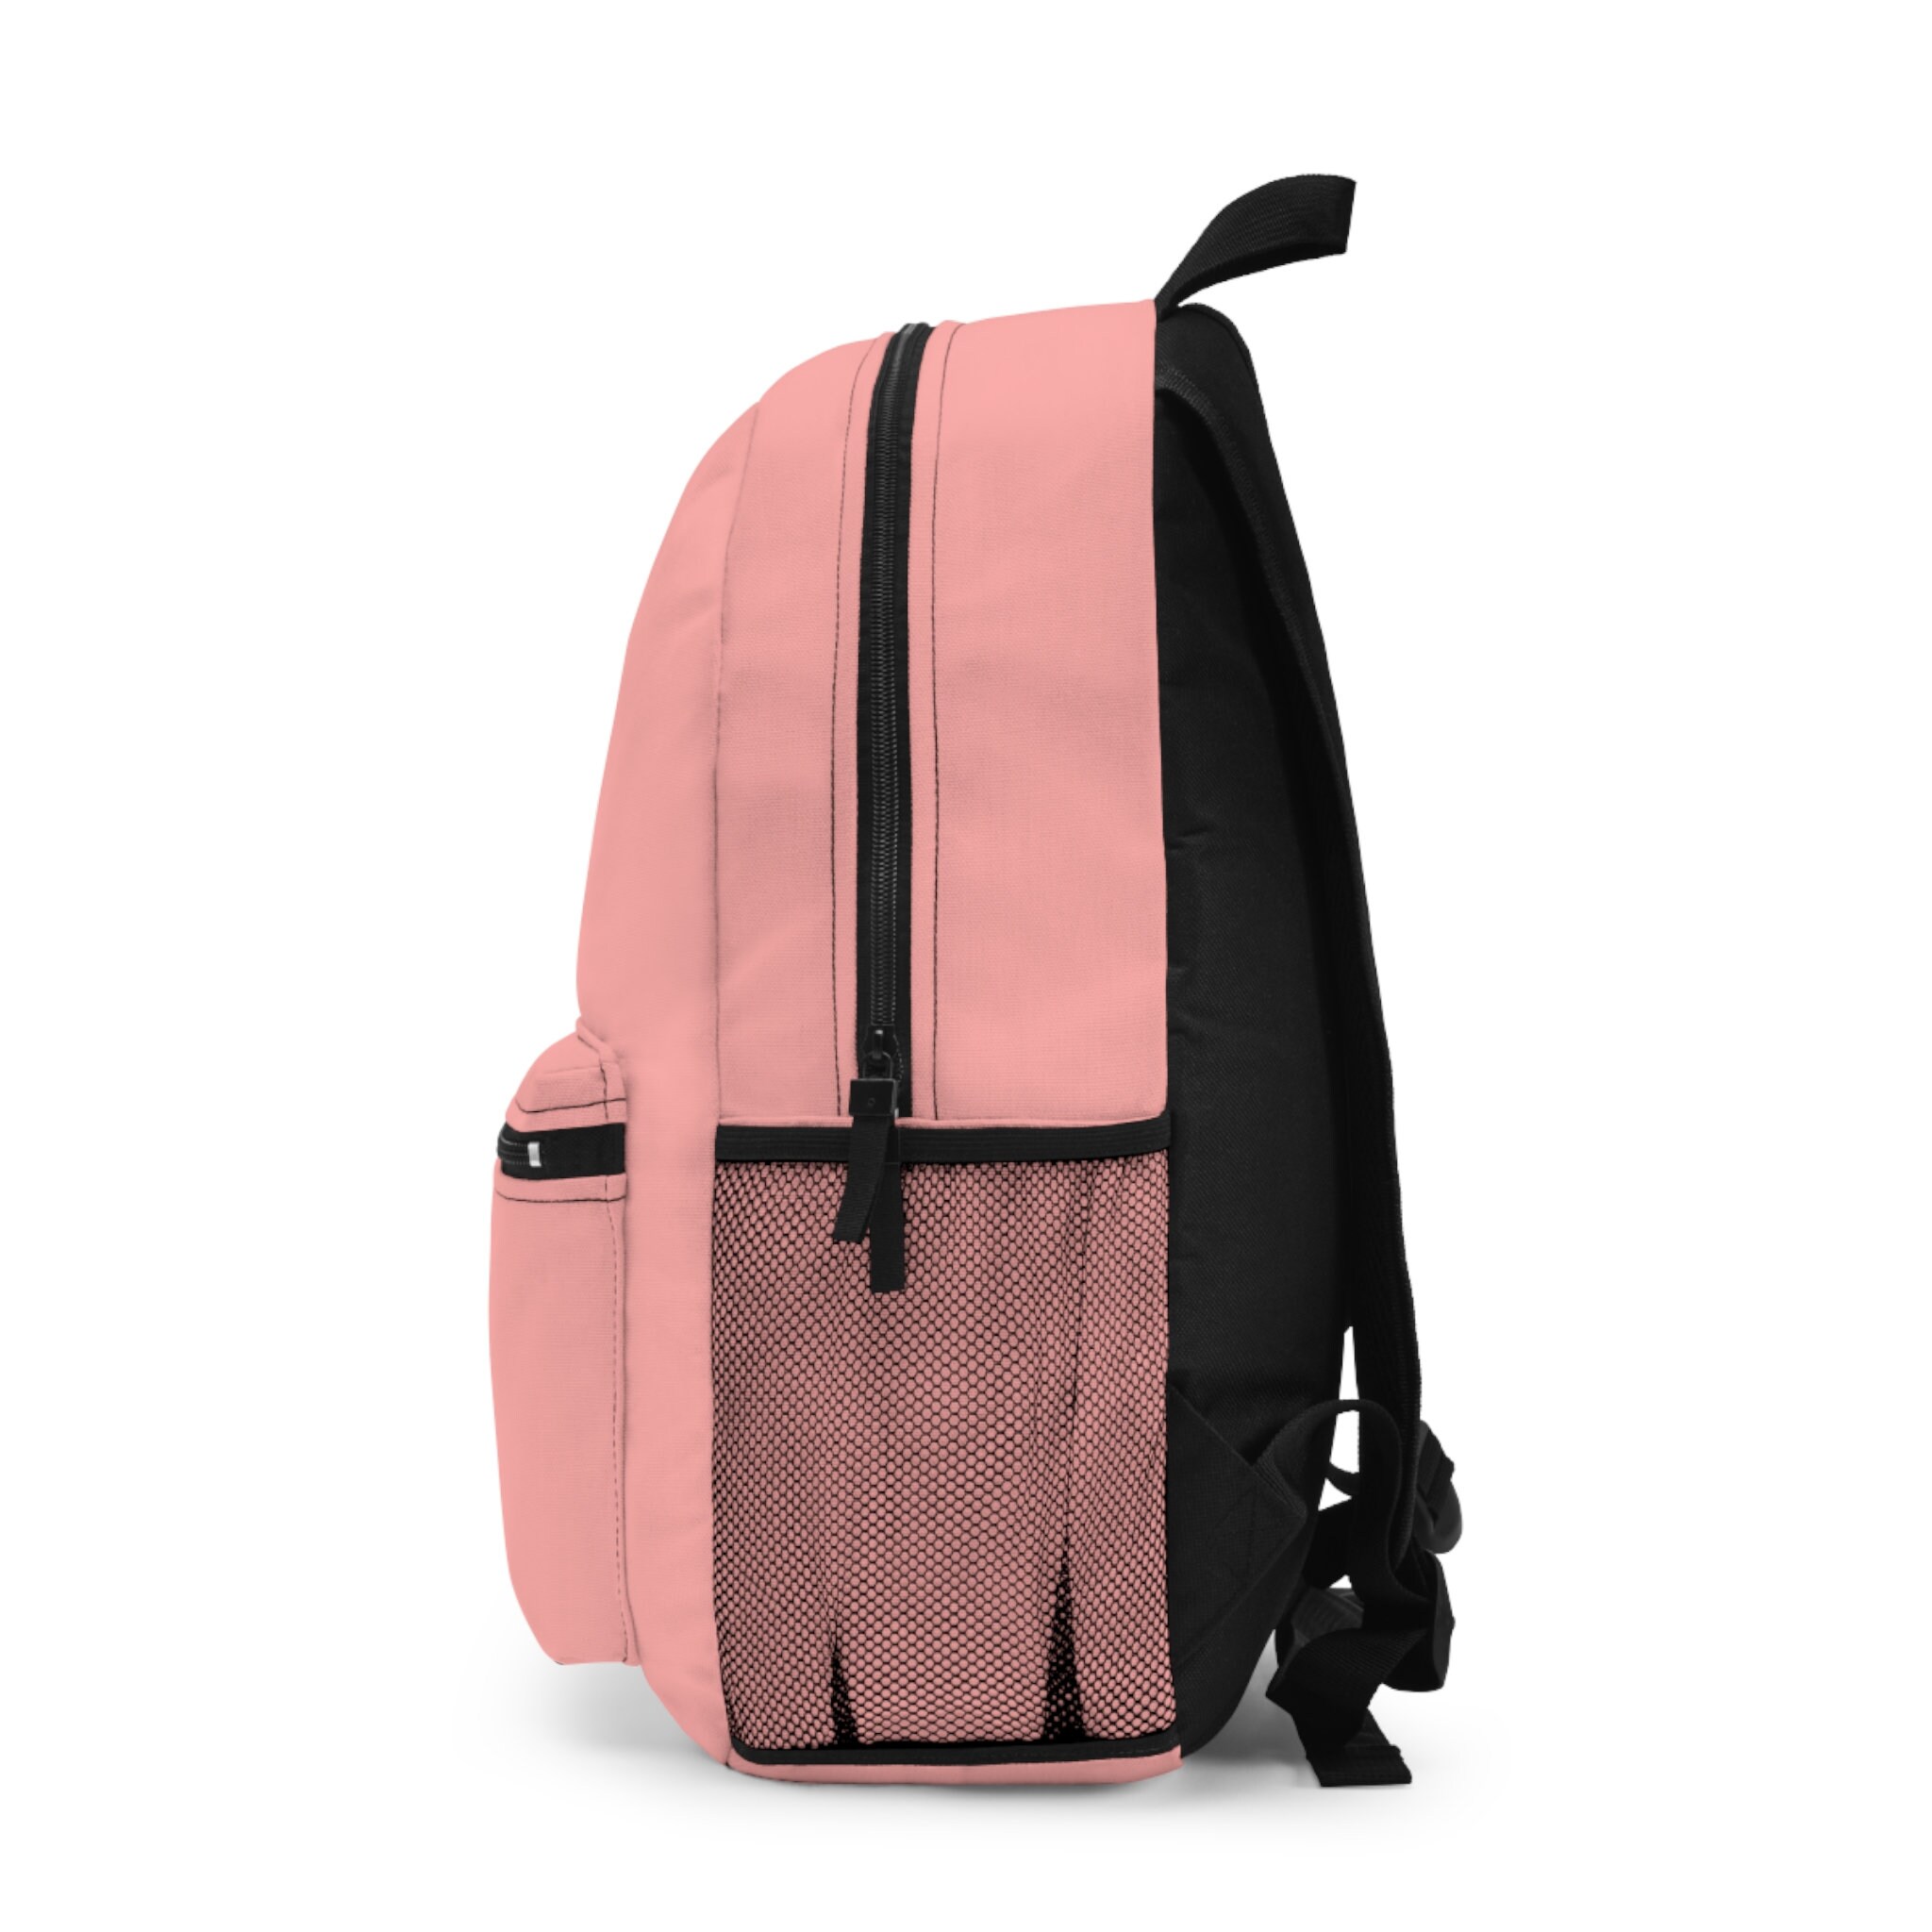 Custom Name Flower Girl Princess Initial Personalized Gift School Backpack